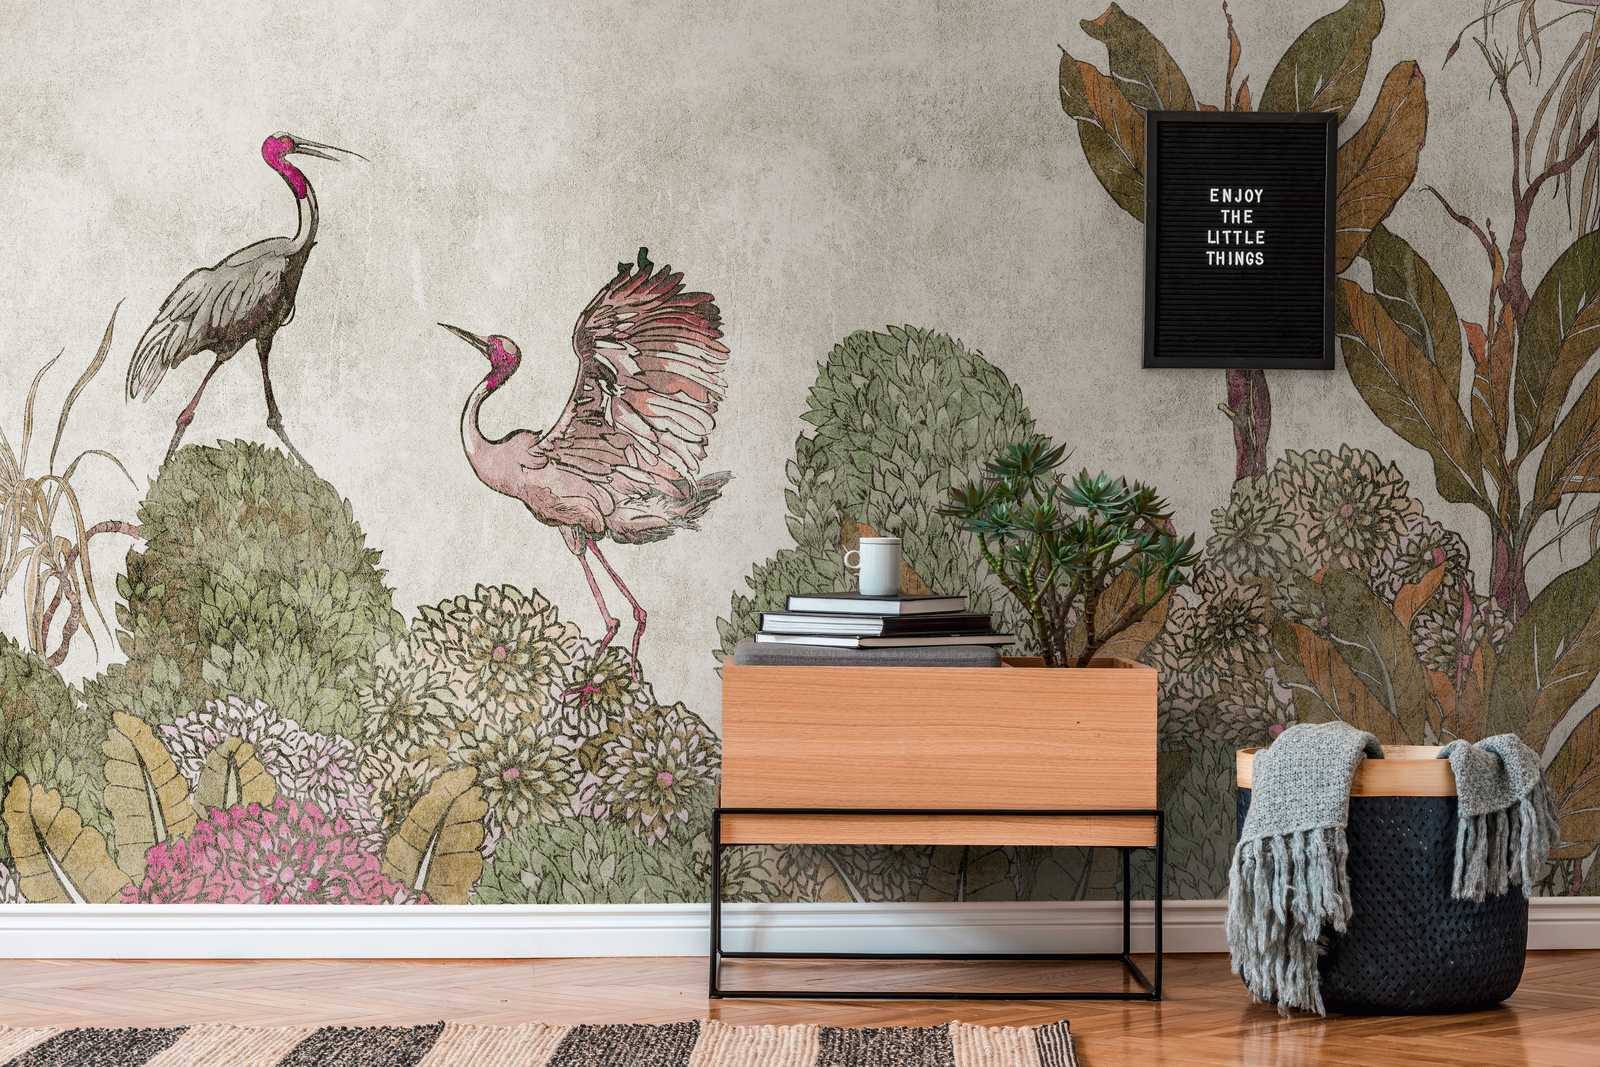             Wallpaper novelty | motif wallpaper tropical plants & cranes in used look
        